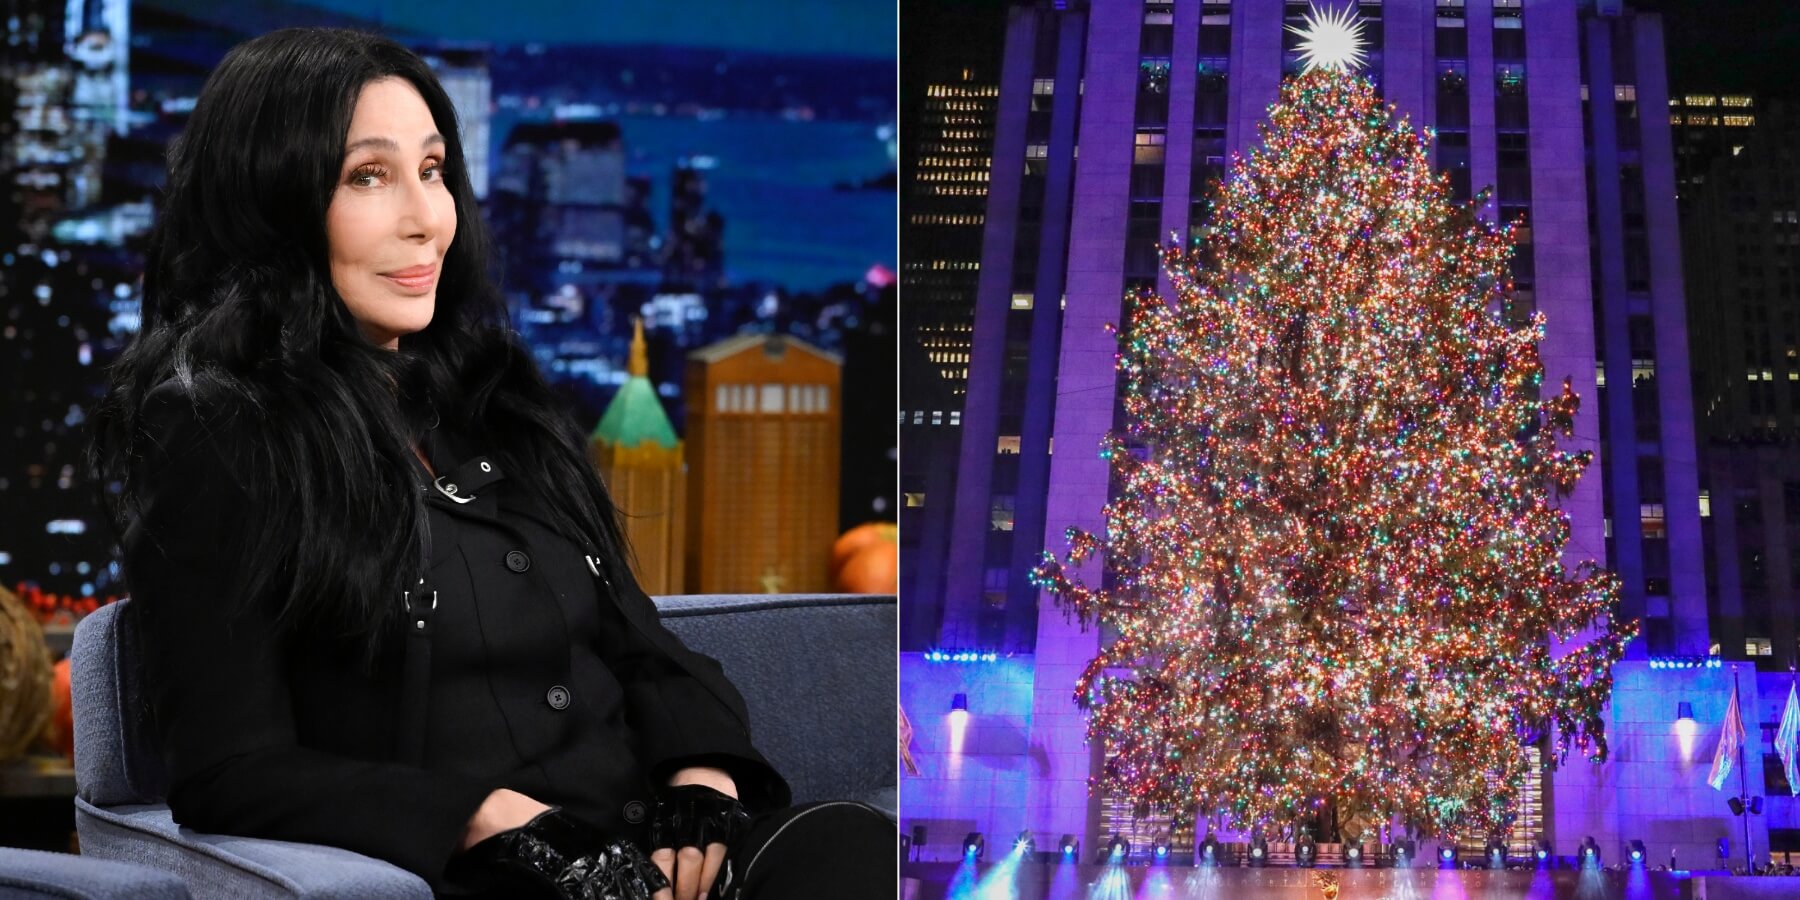 Cher in a side by side image alongside the Rockefeller Center Christmas Tree.